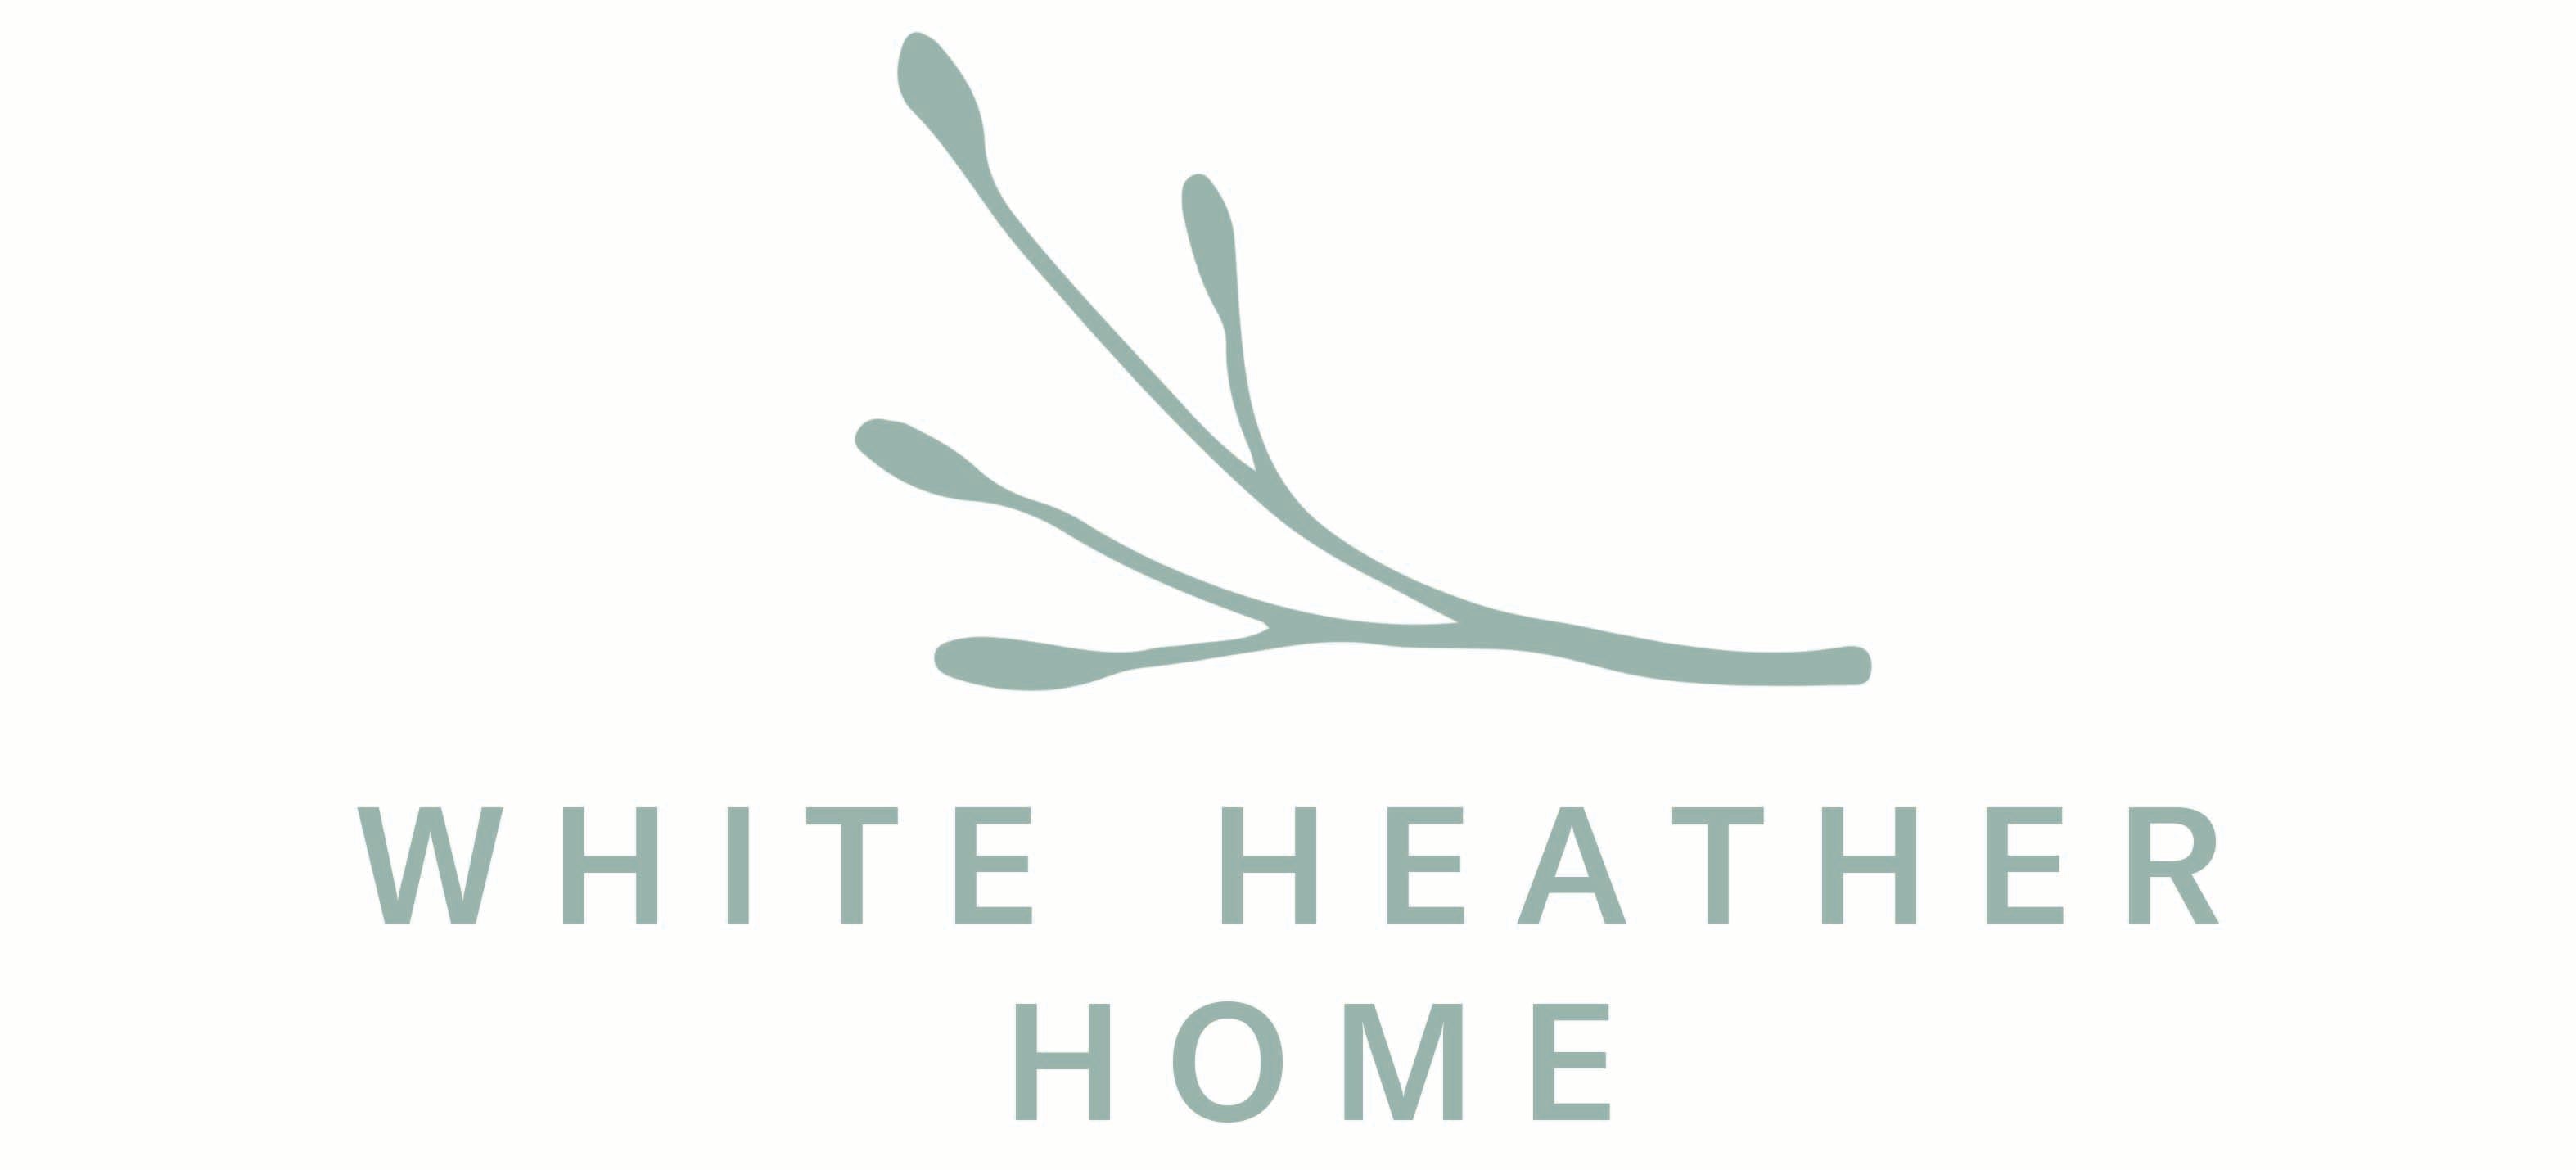 Logo of White Heather Home on white background